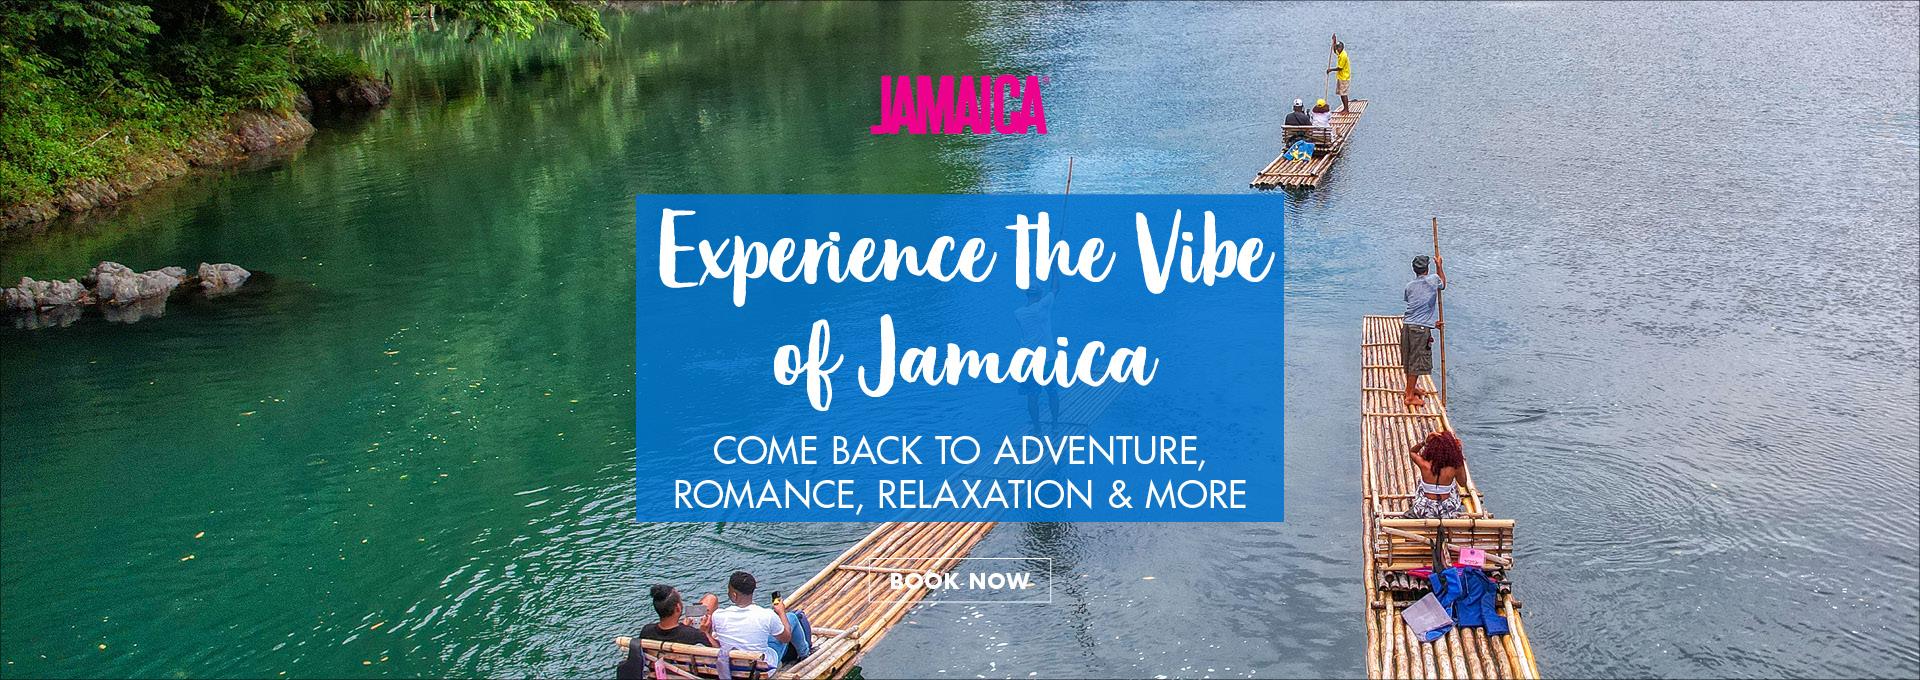 Jamaica tourism banner